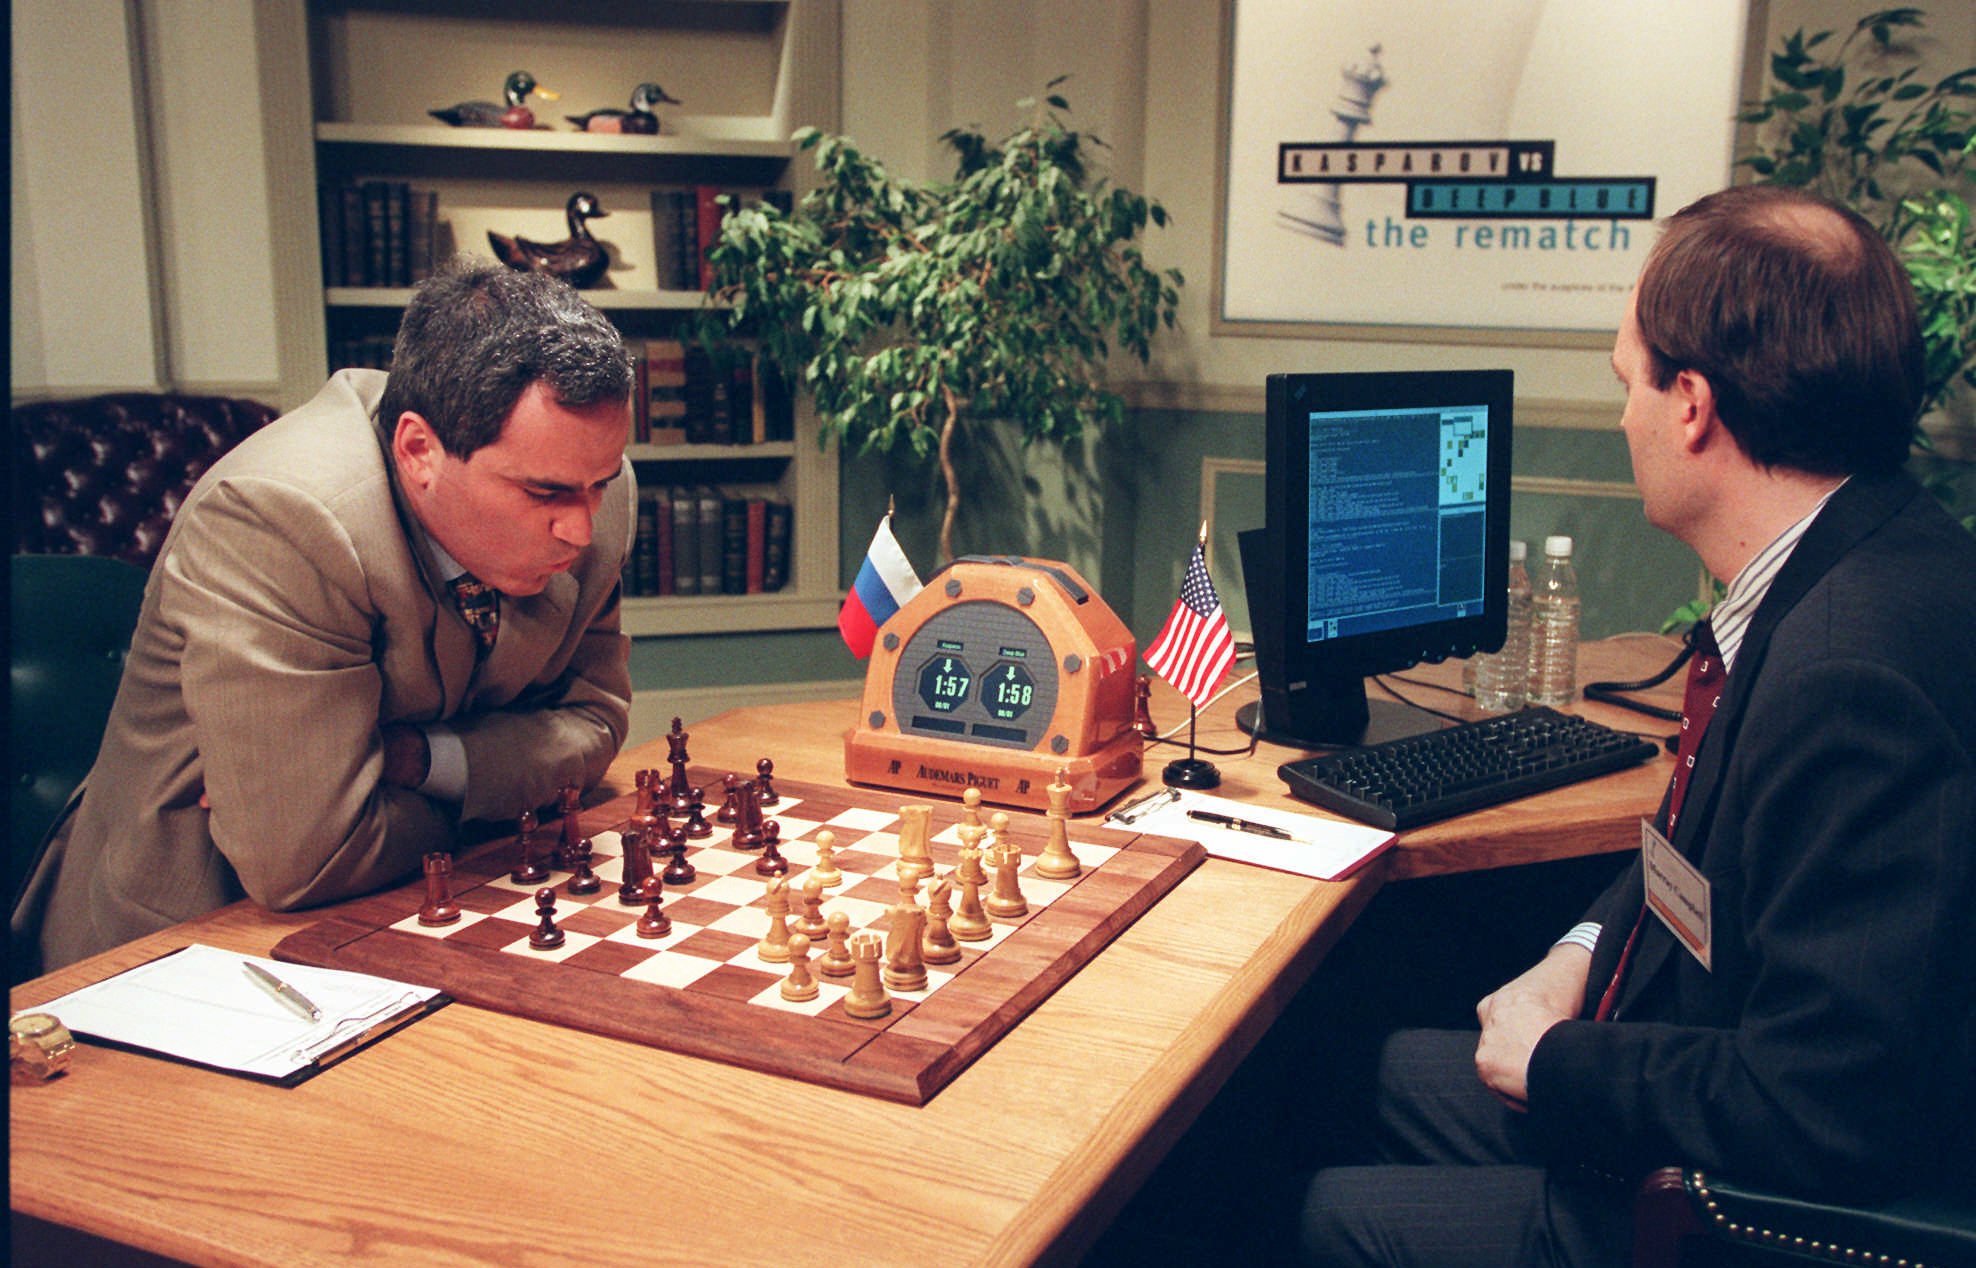 Chess is a game. Deep Blue шахматный компьютер 1997.